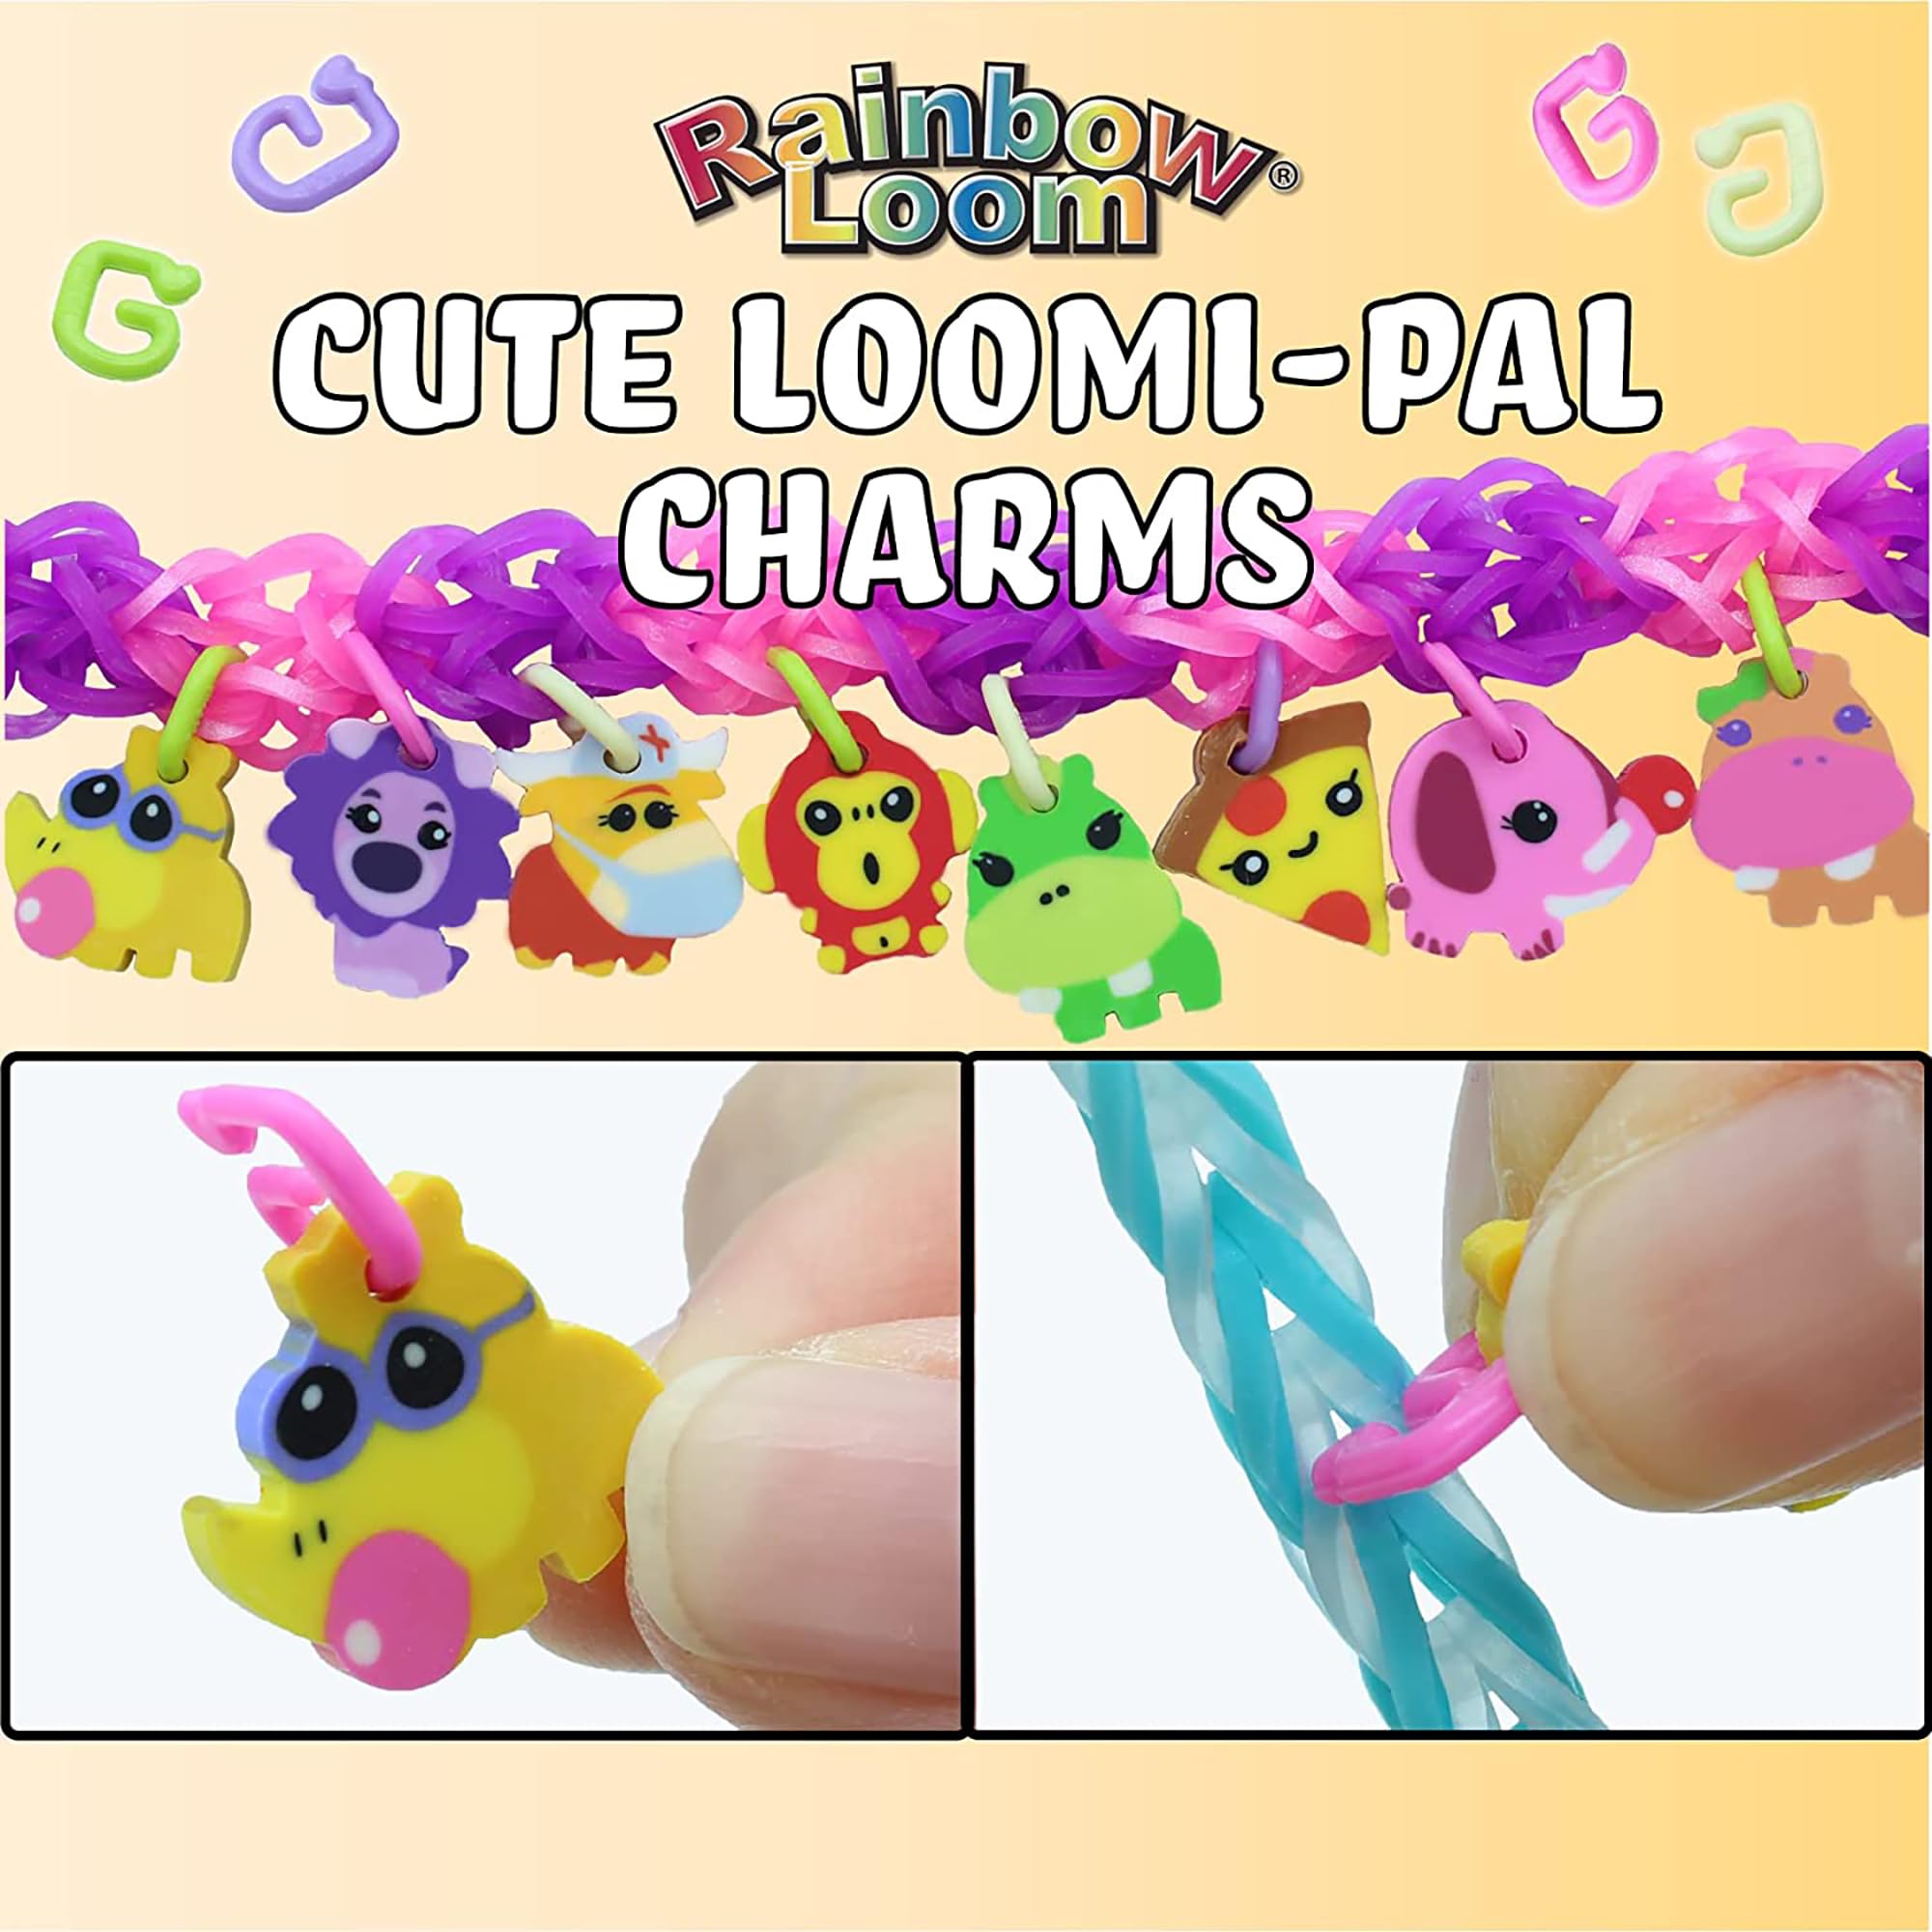 Rainbow Loom: Loomi-Pals Collectible 4 PK Bundle: Zoo, Dino, Fairy, Food - 4 Rubber Band DIY Charm Bracelet Kits, Design & Create, Ages 7+